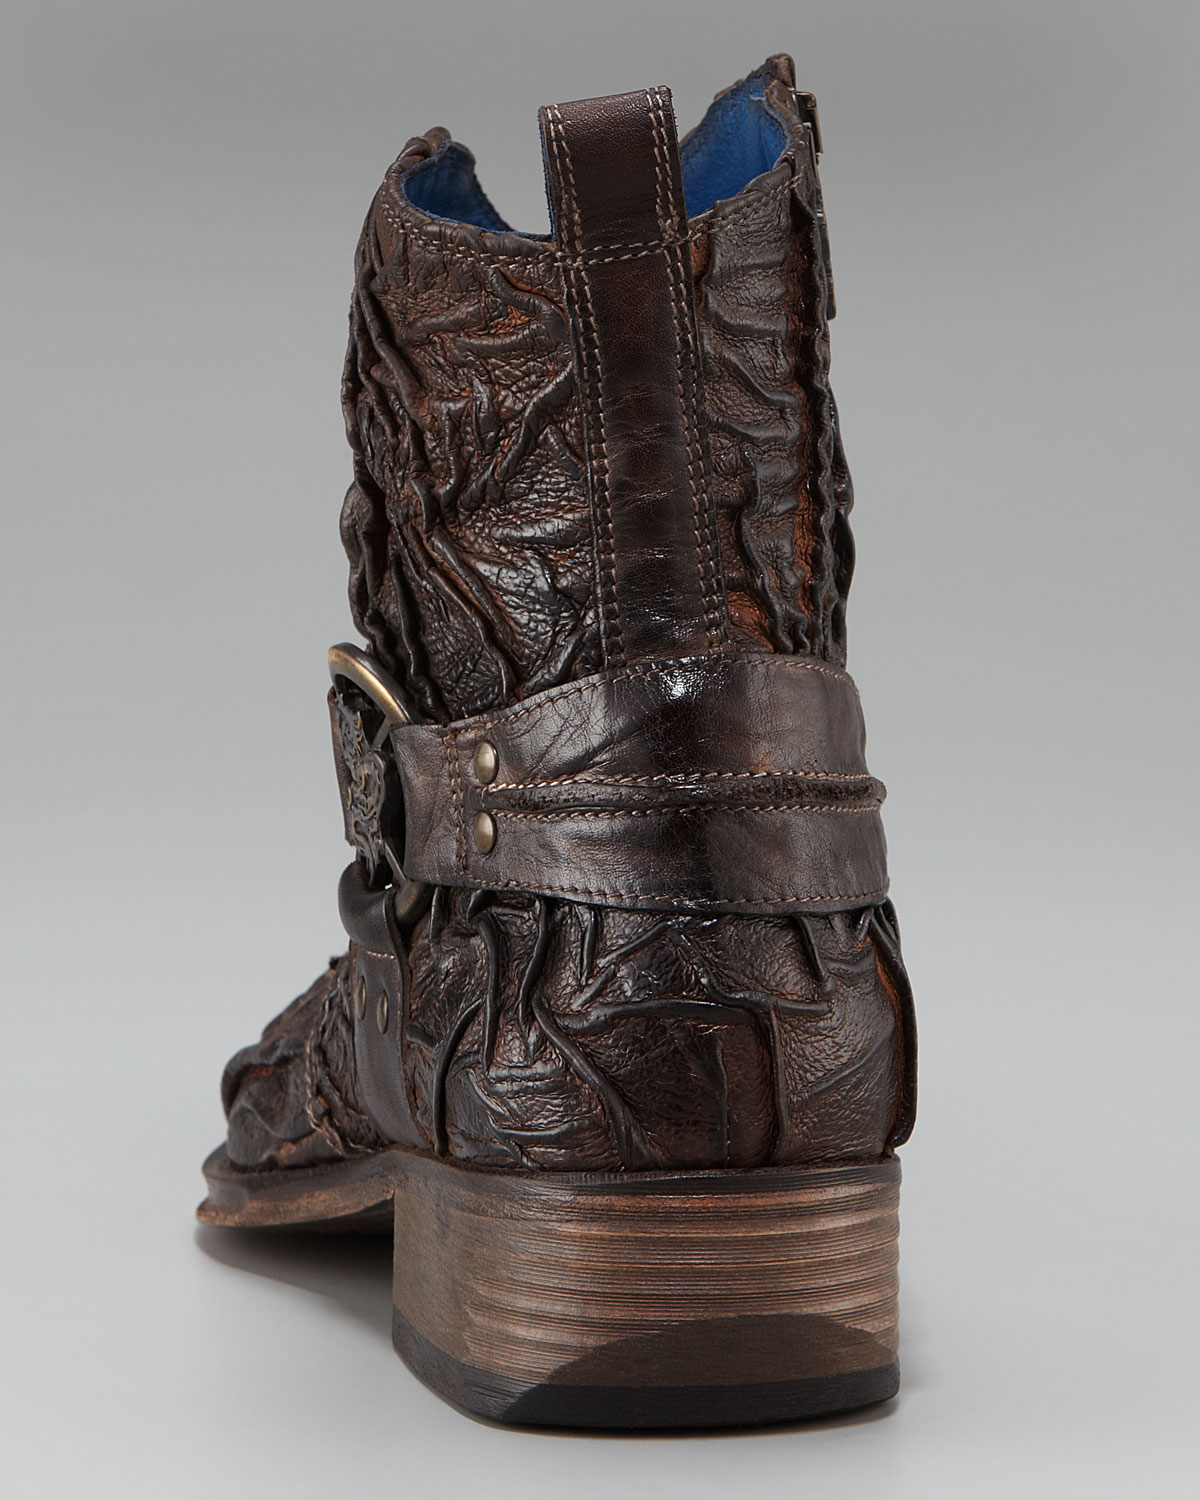 mark nason cowboy boots